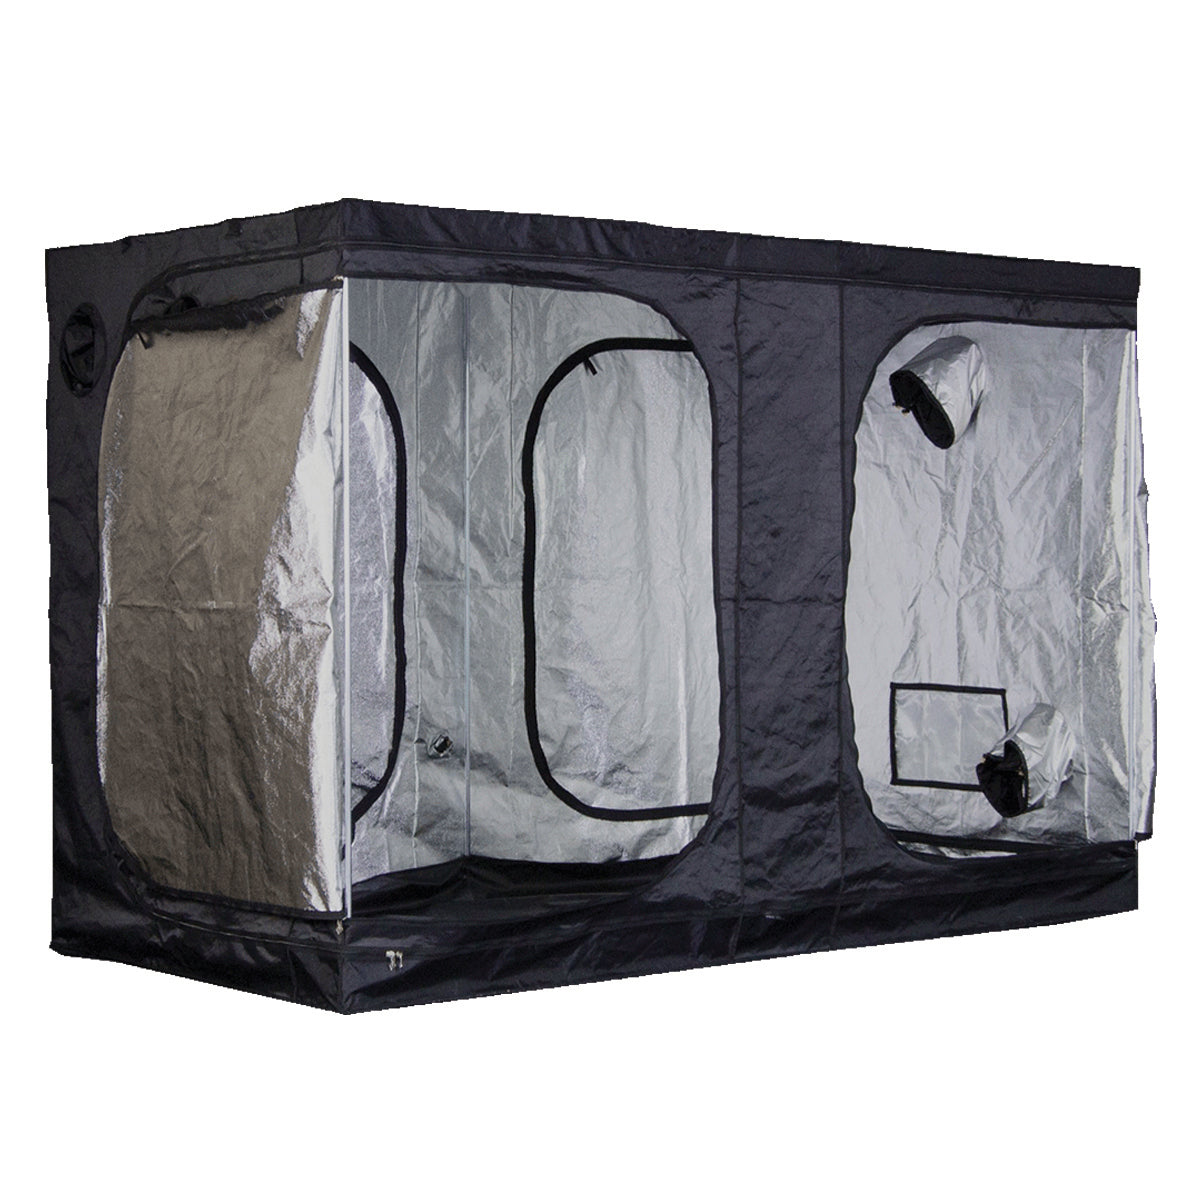 Product Image:Mammoth Pro+ 300L 9.8' X 4.9' X 6.6' Grow Tent